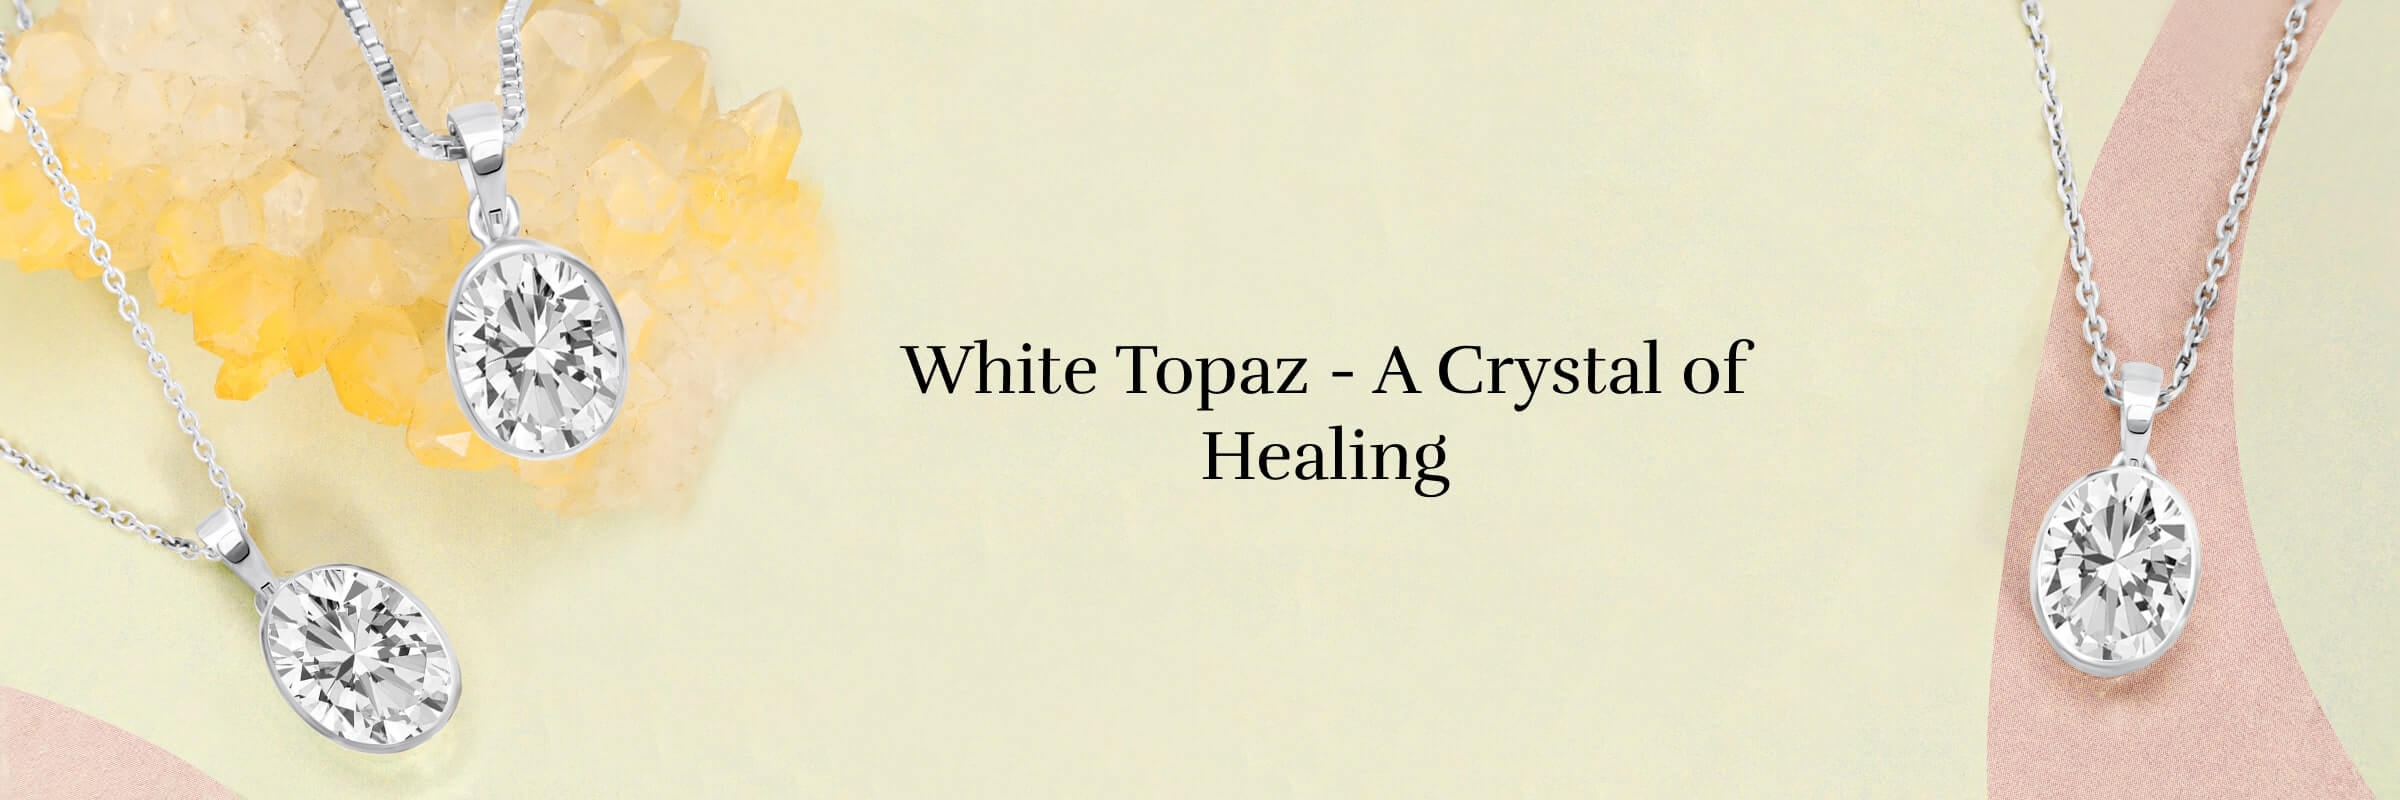 Healing Properties of White Topaz Crystal